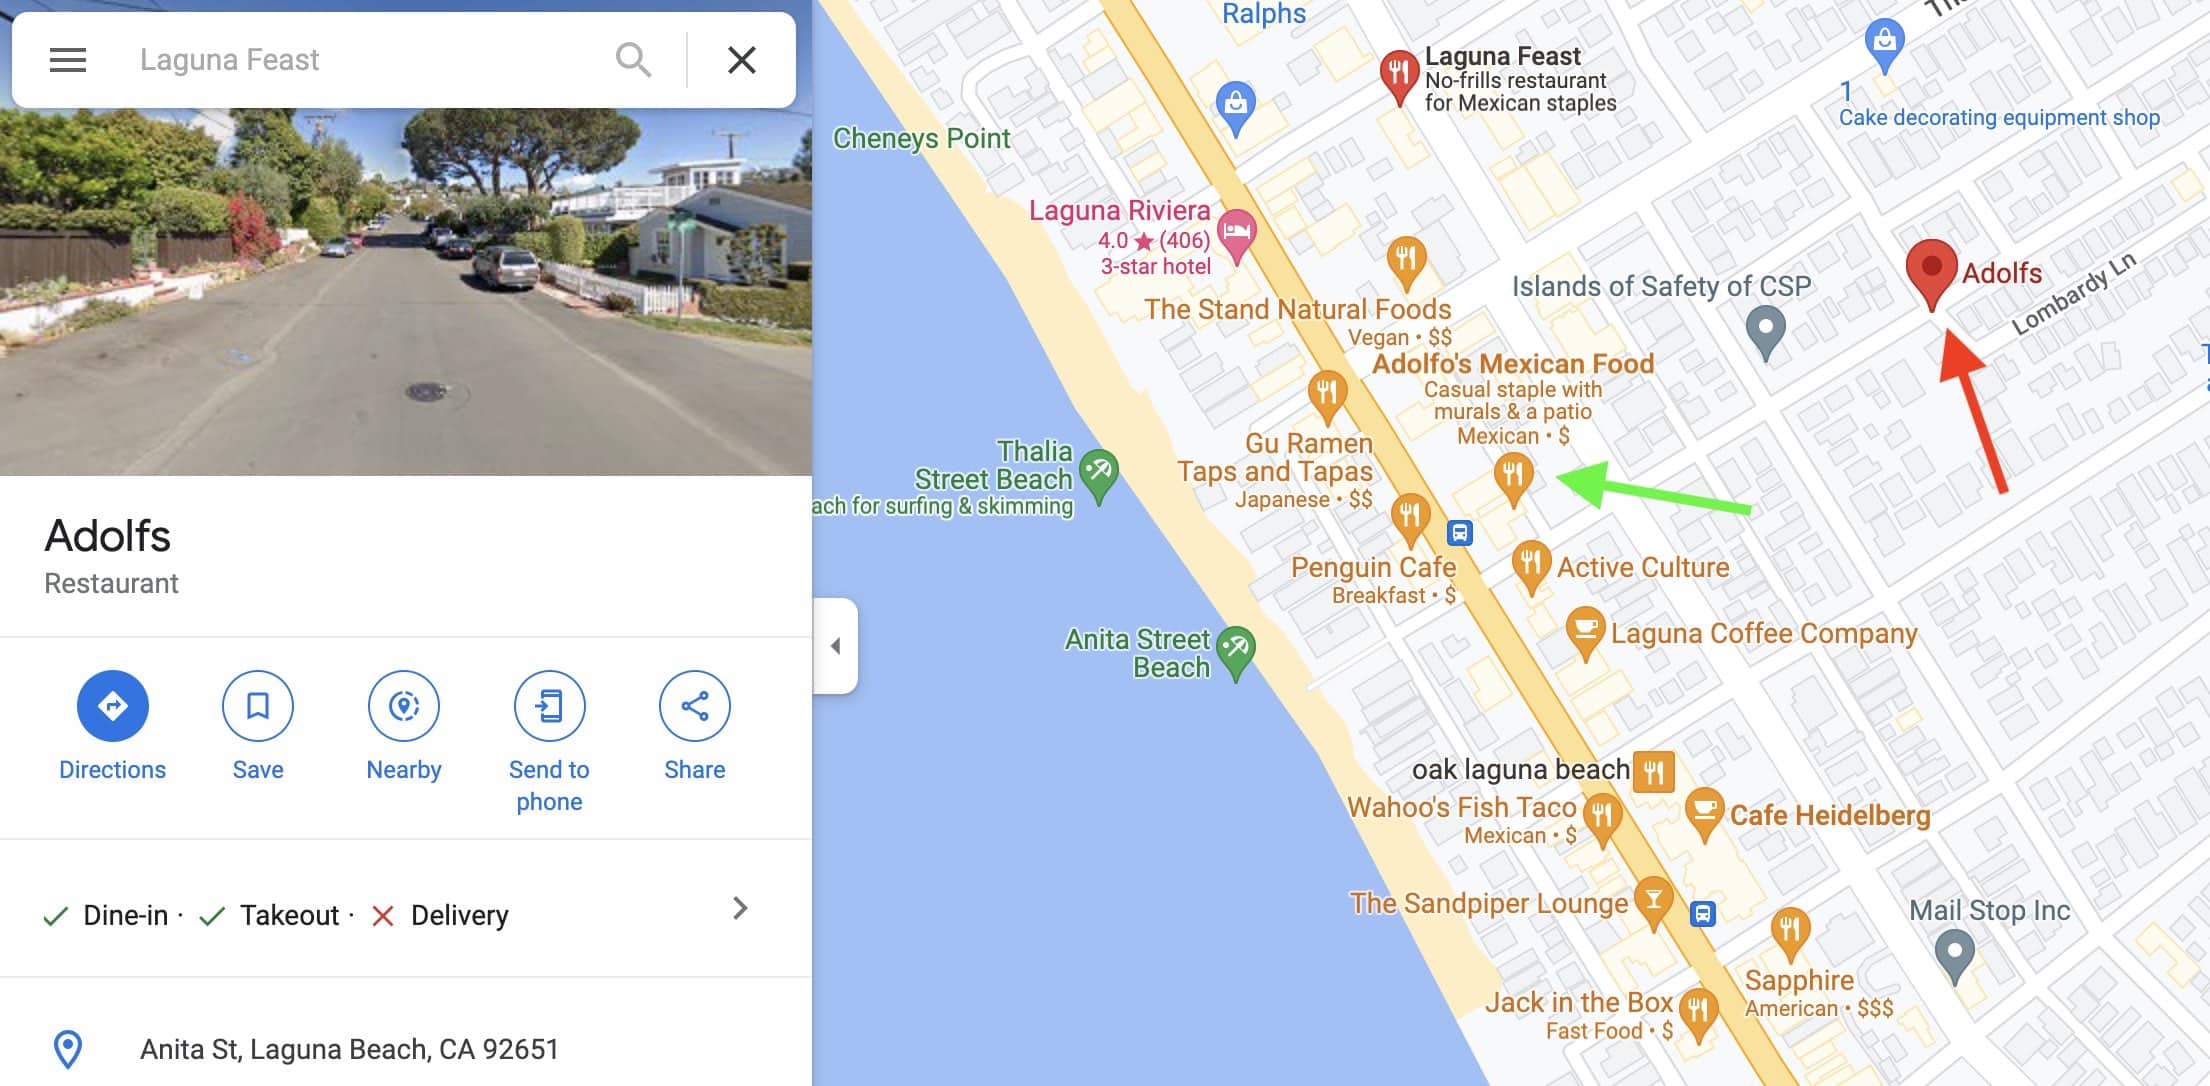 Google Maps bad data for Adolfo's restaurant in Laguna Beach